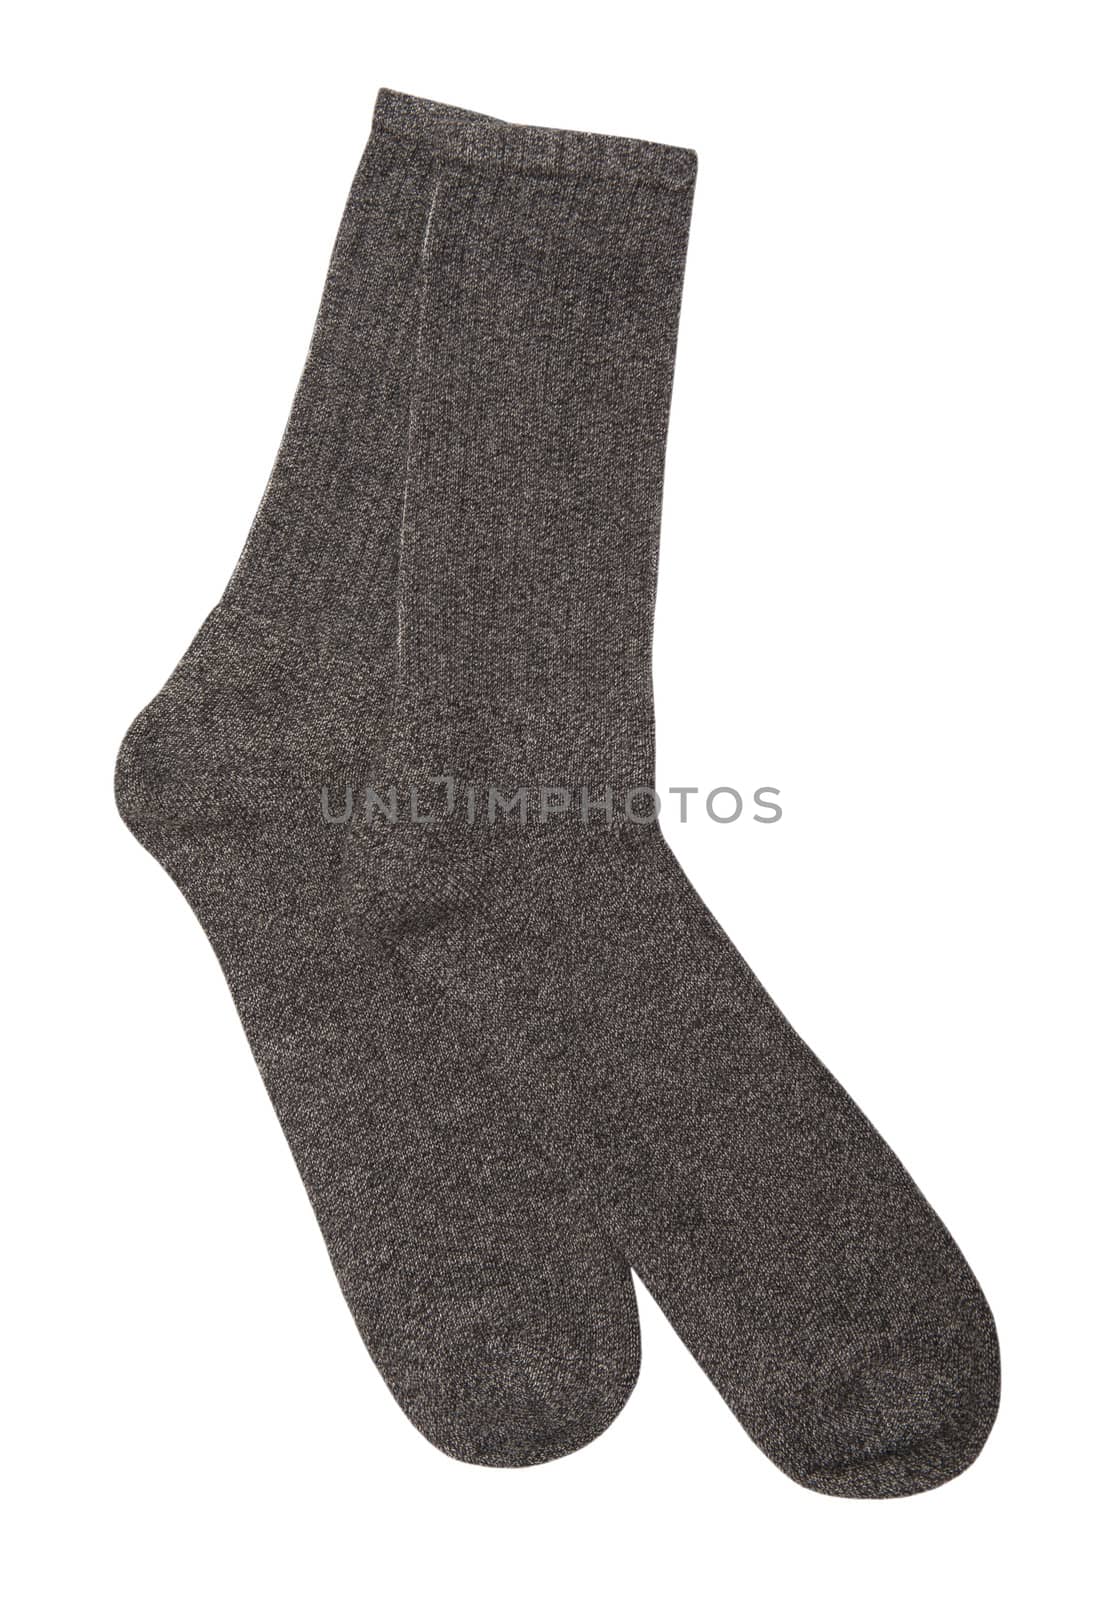 Socks isolated on the white background